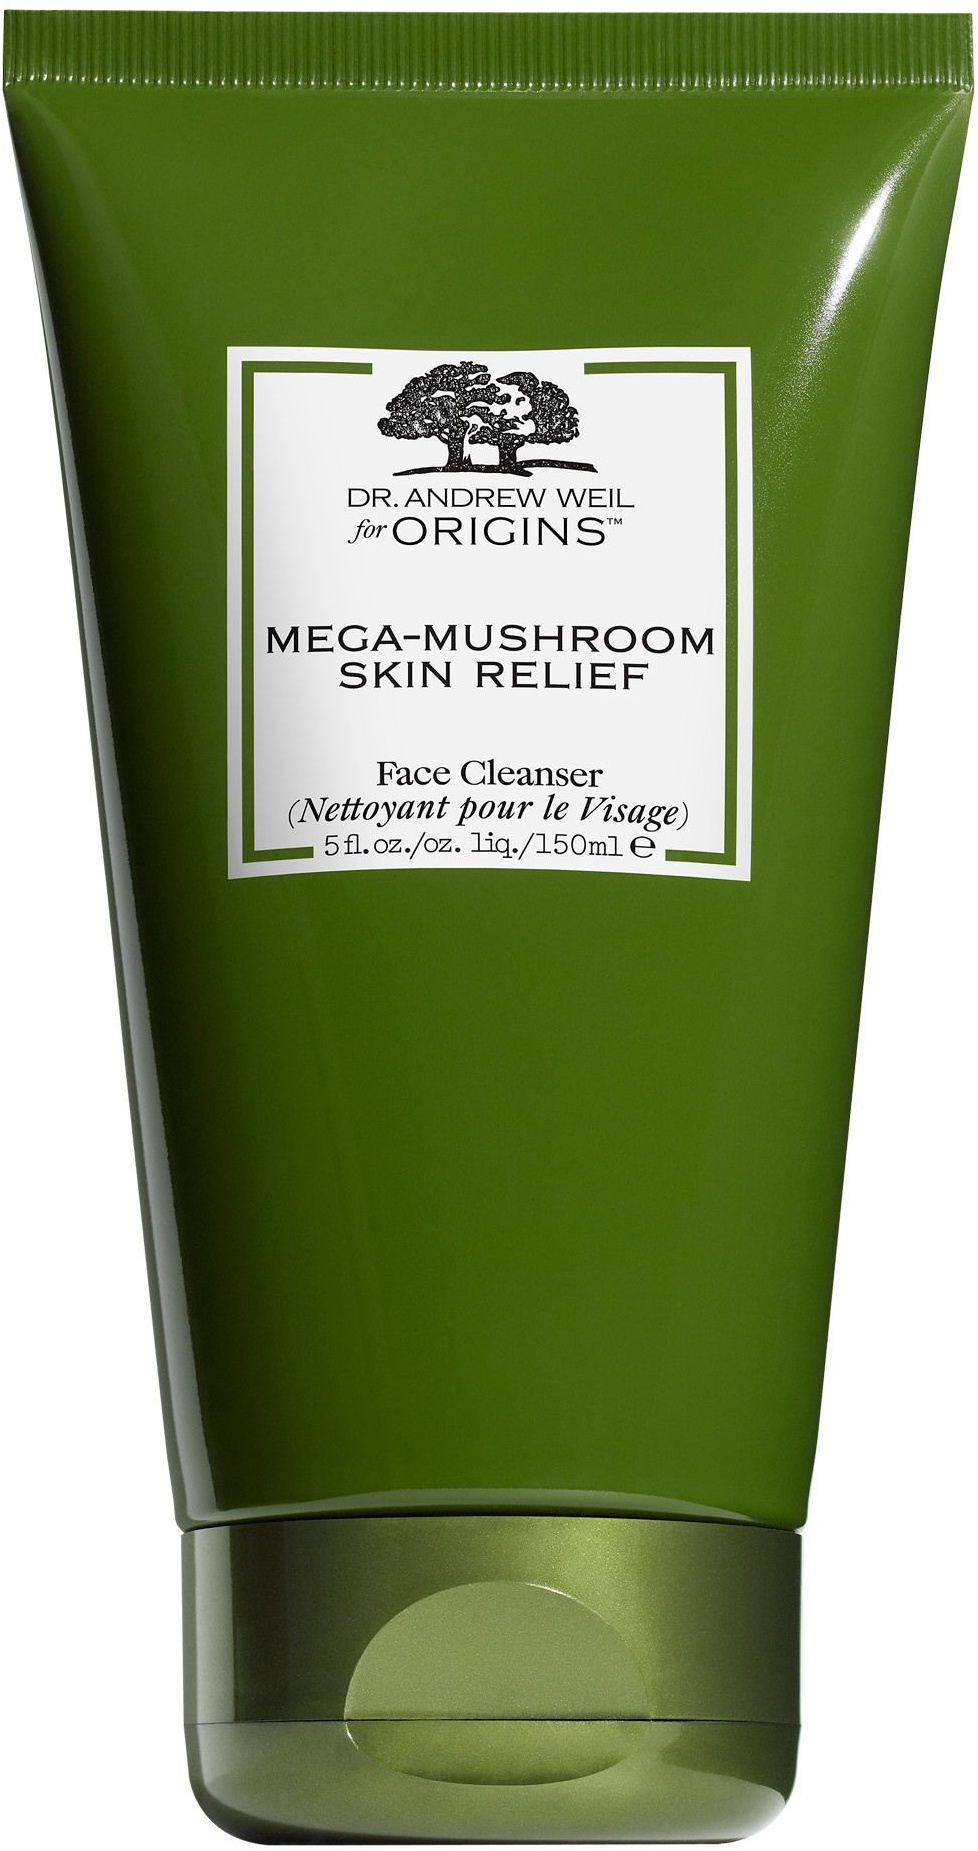 DR. ANDREW WEIL FOR ORIGINSTM Mega-Mushroom Skin Relief Face Cleanser 150 ml produit(s) démaquillant(s)